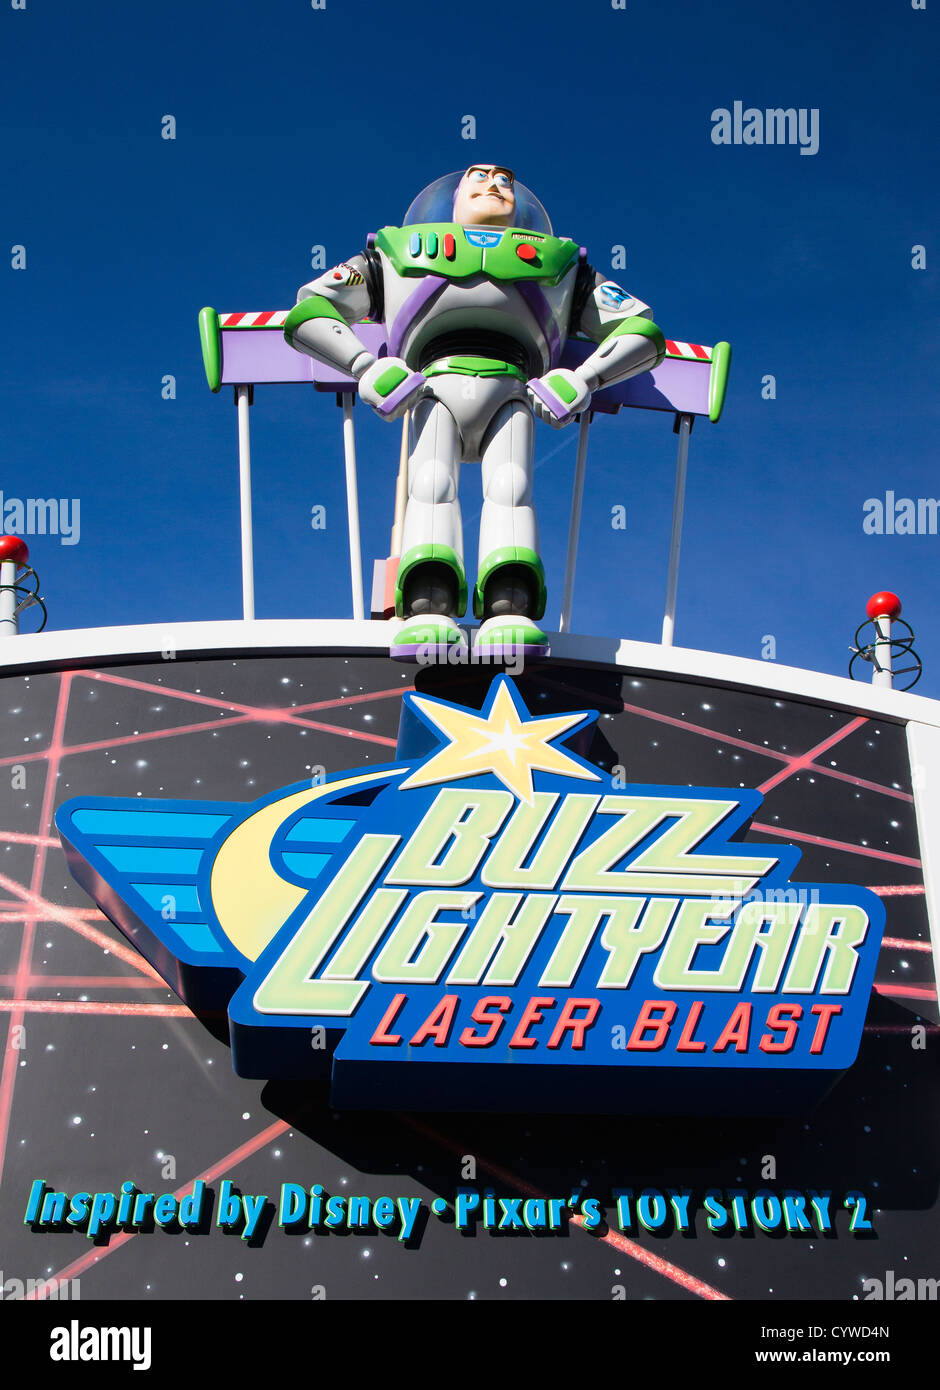 Buzz Lightyear Laser Blast viaje a Disneyland París (Euro Disney) Foto de stock